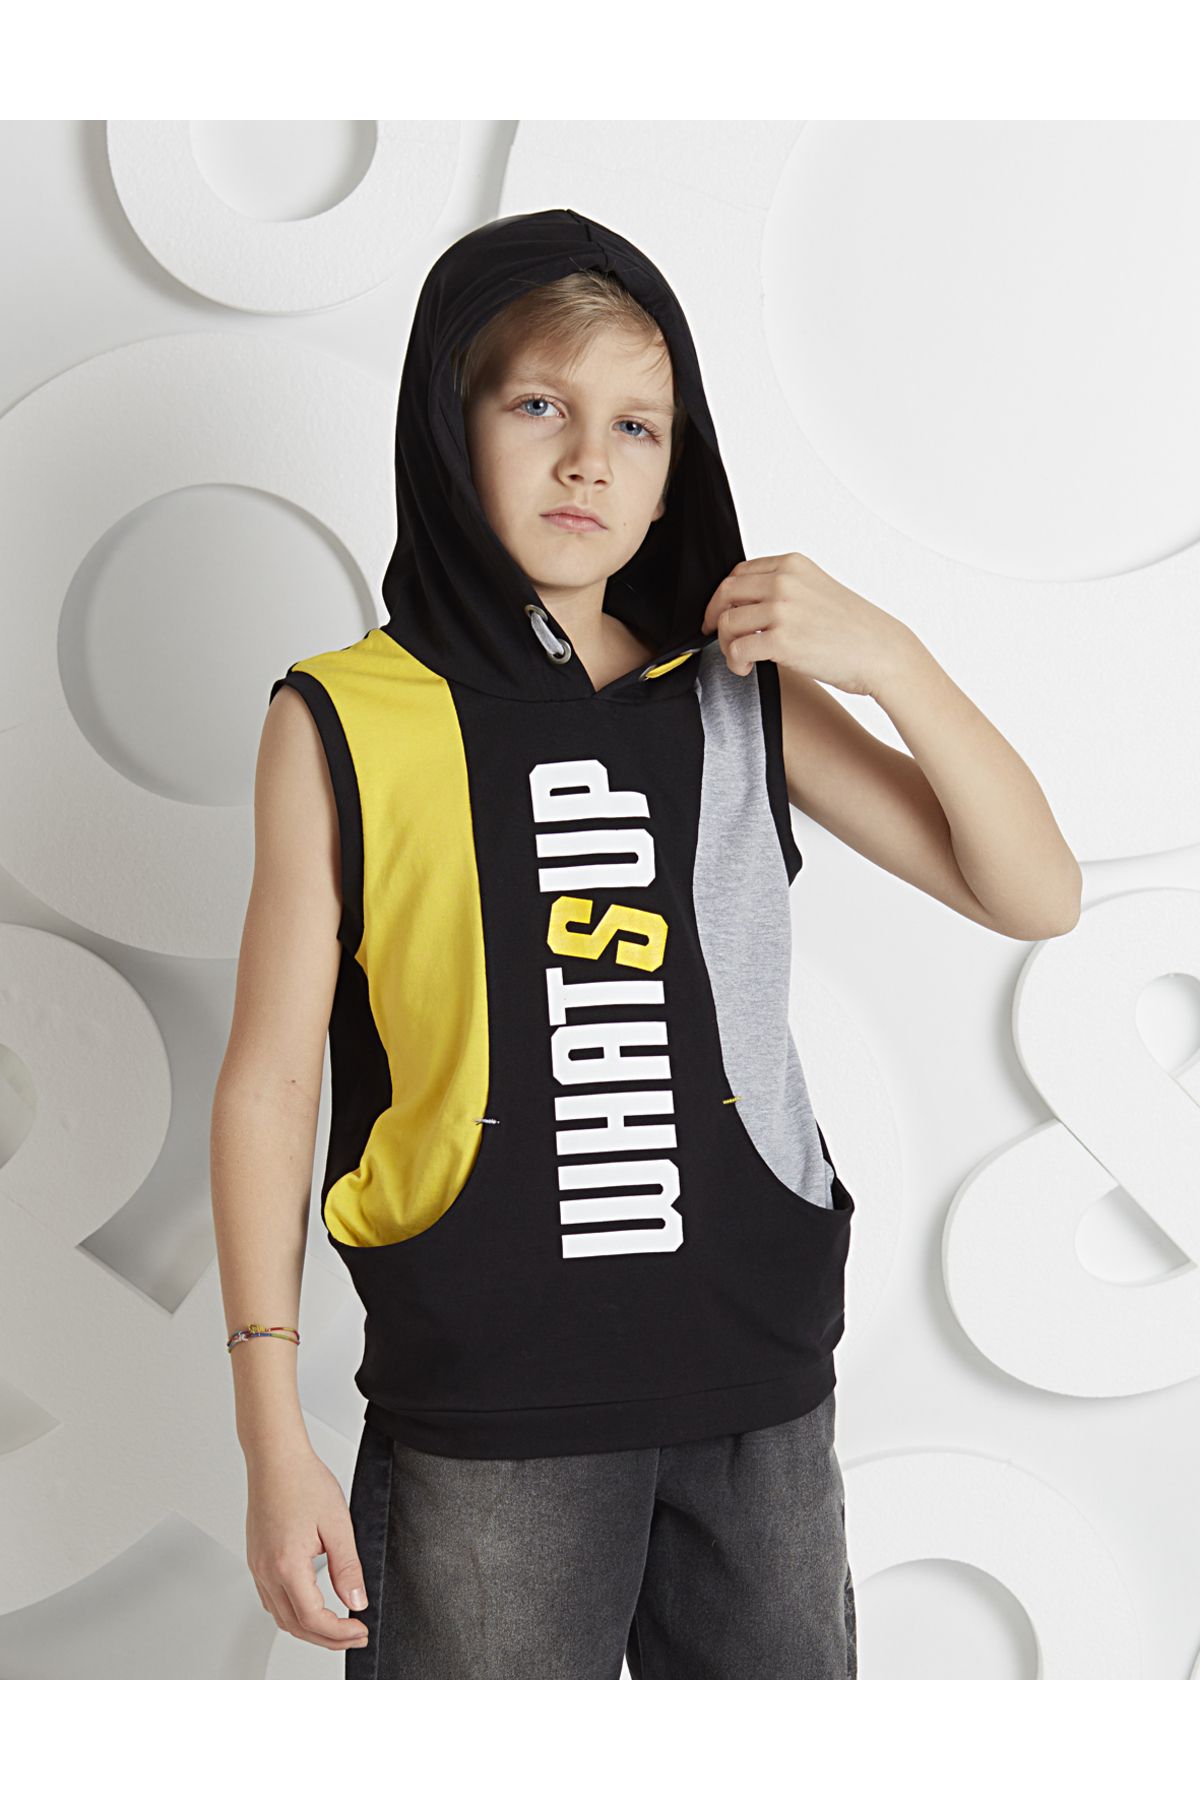 MSHB&G Whats Up Erkek Çocuk Kolsuz Sweatshirt